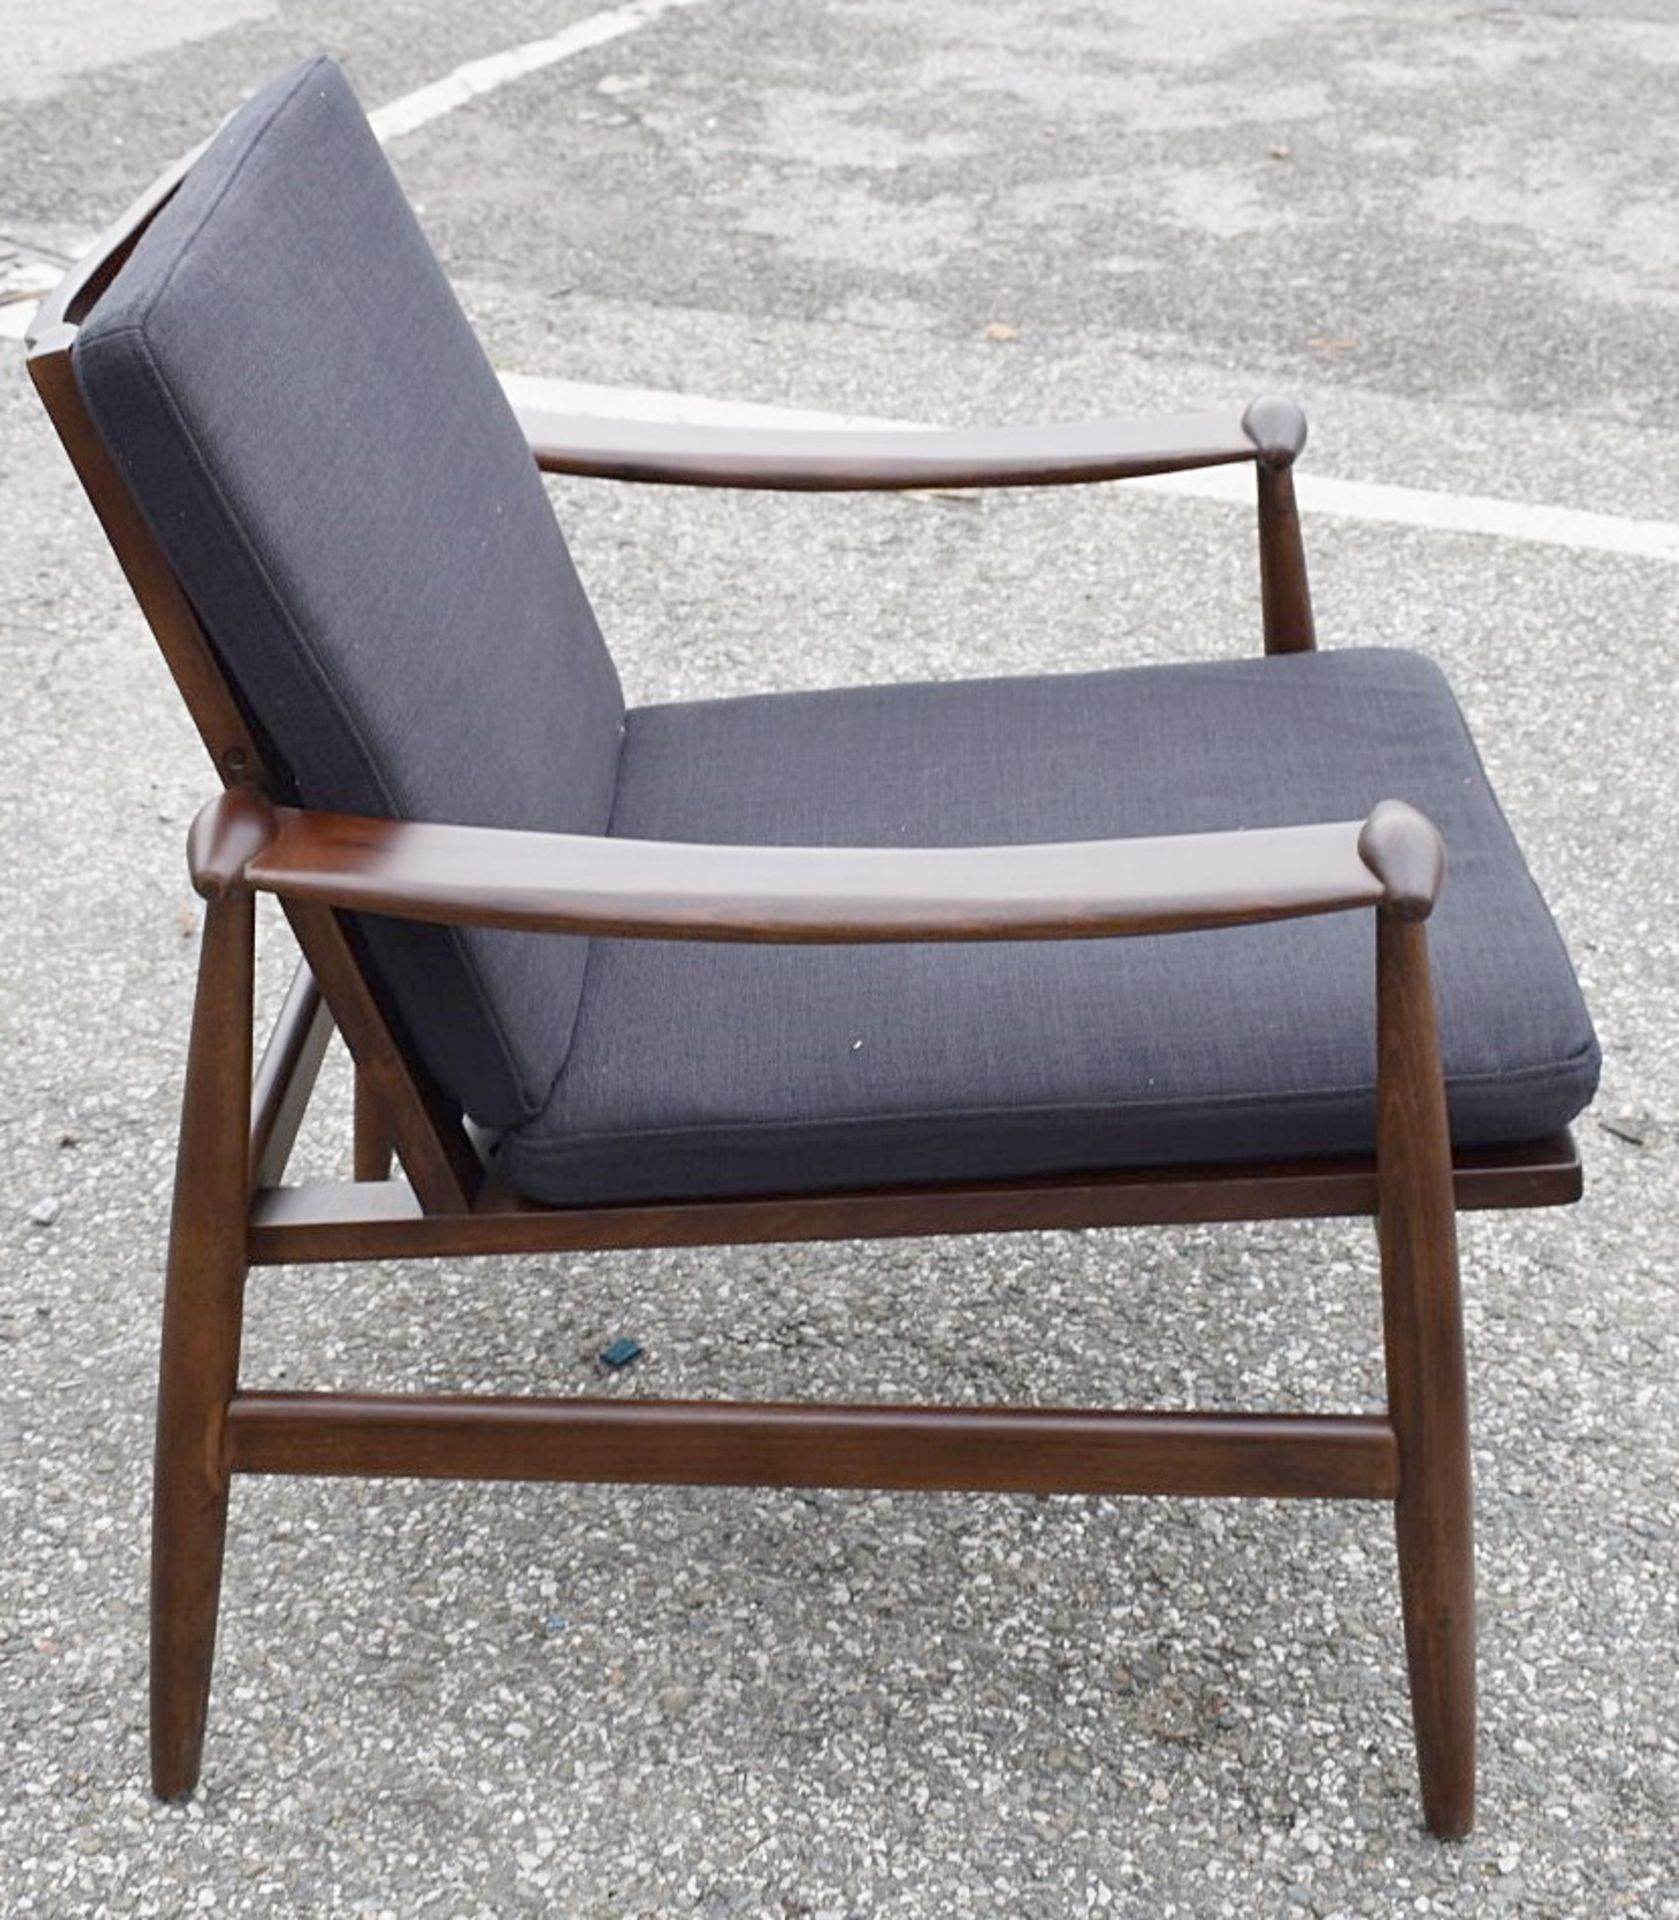 1 x 'Academy' Retro Designer-Inspired Arm Chair - New / Unused Stock - Image 5 of 5